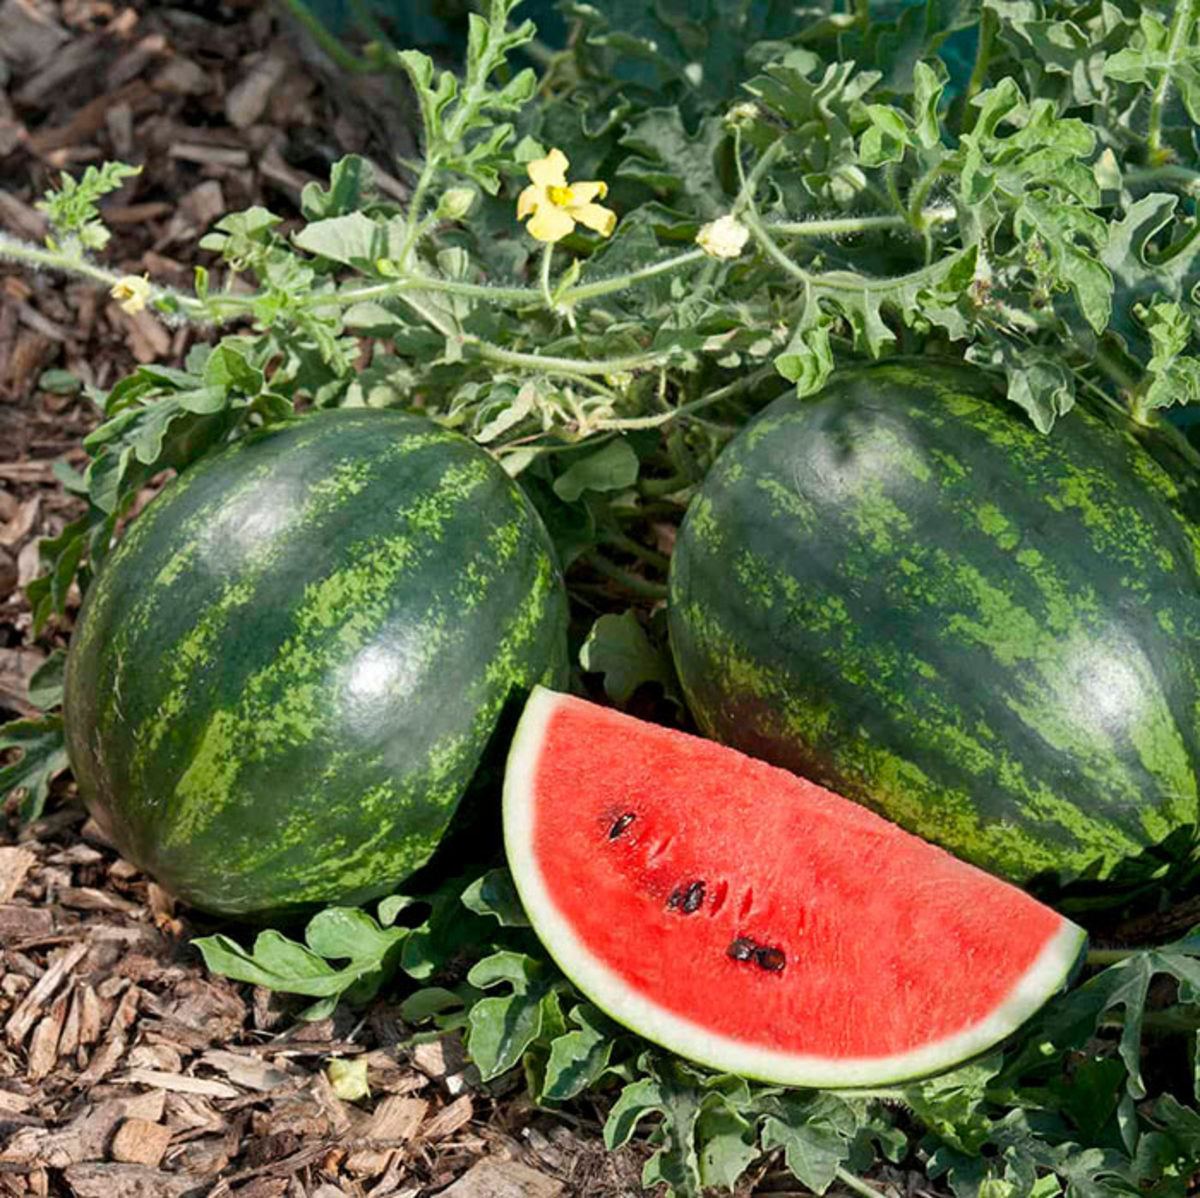 'Mini Love' watermelon